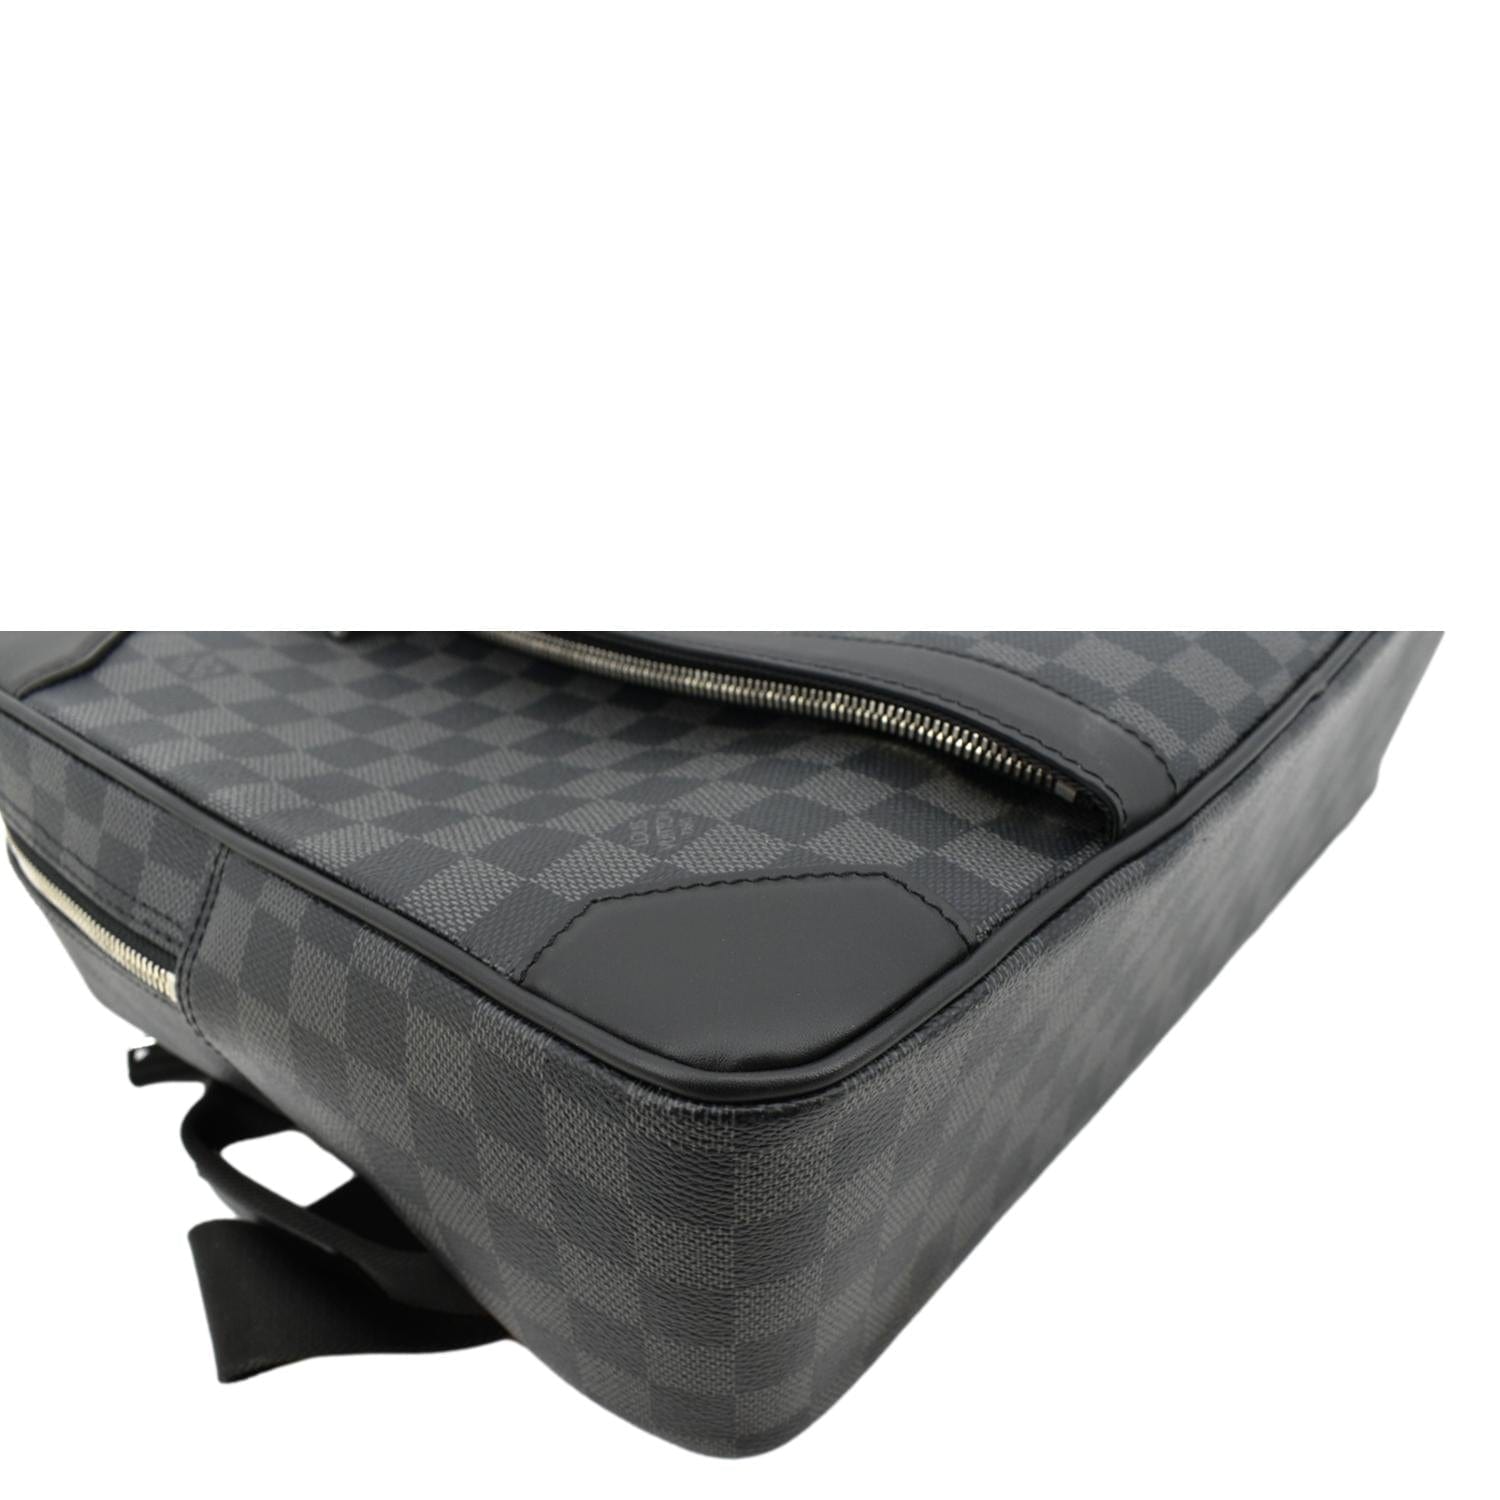 Louis Vuitton, Bags, Louis Vuitton Briefcase Backpack